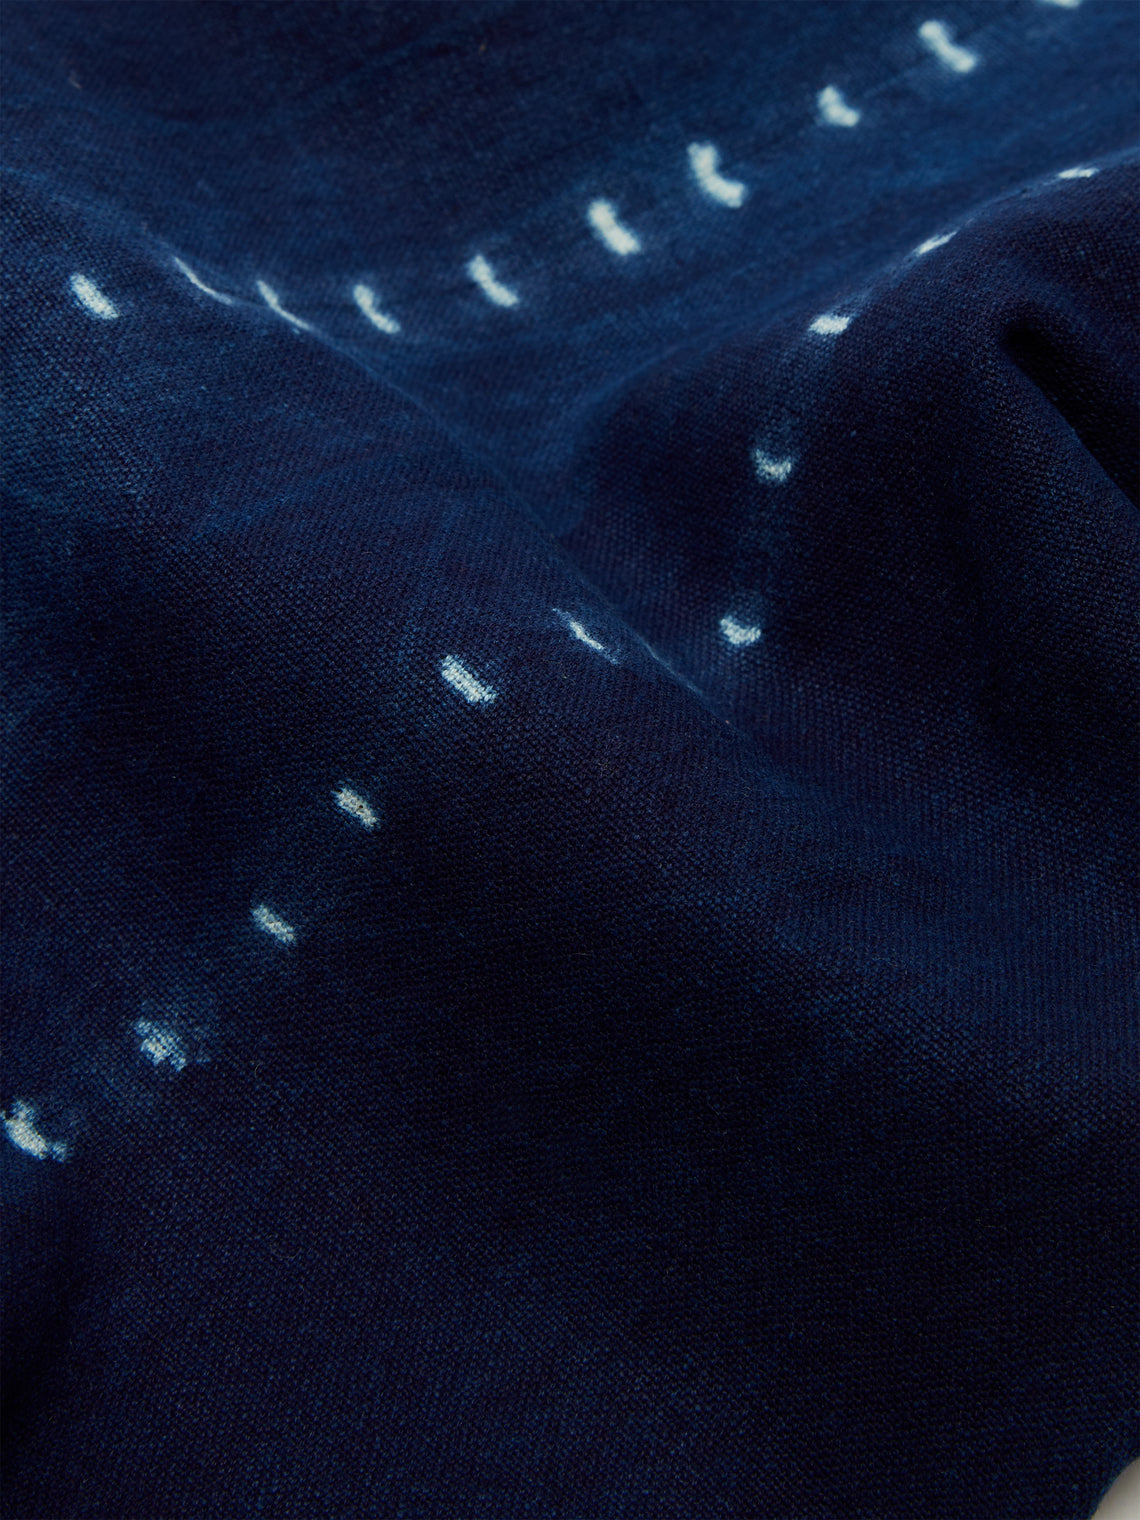 Tensira - Indigo Hand-Dyed Cotton Tablecloth -  - ABASK